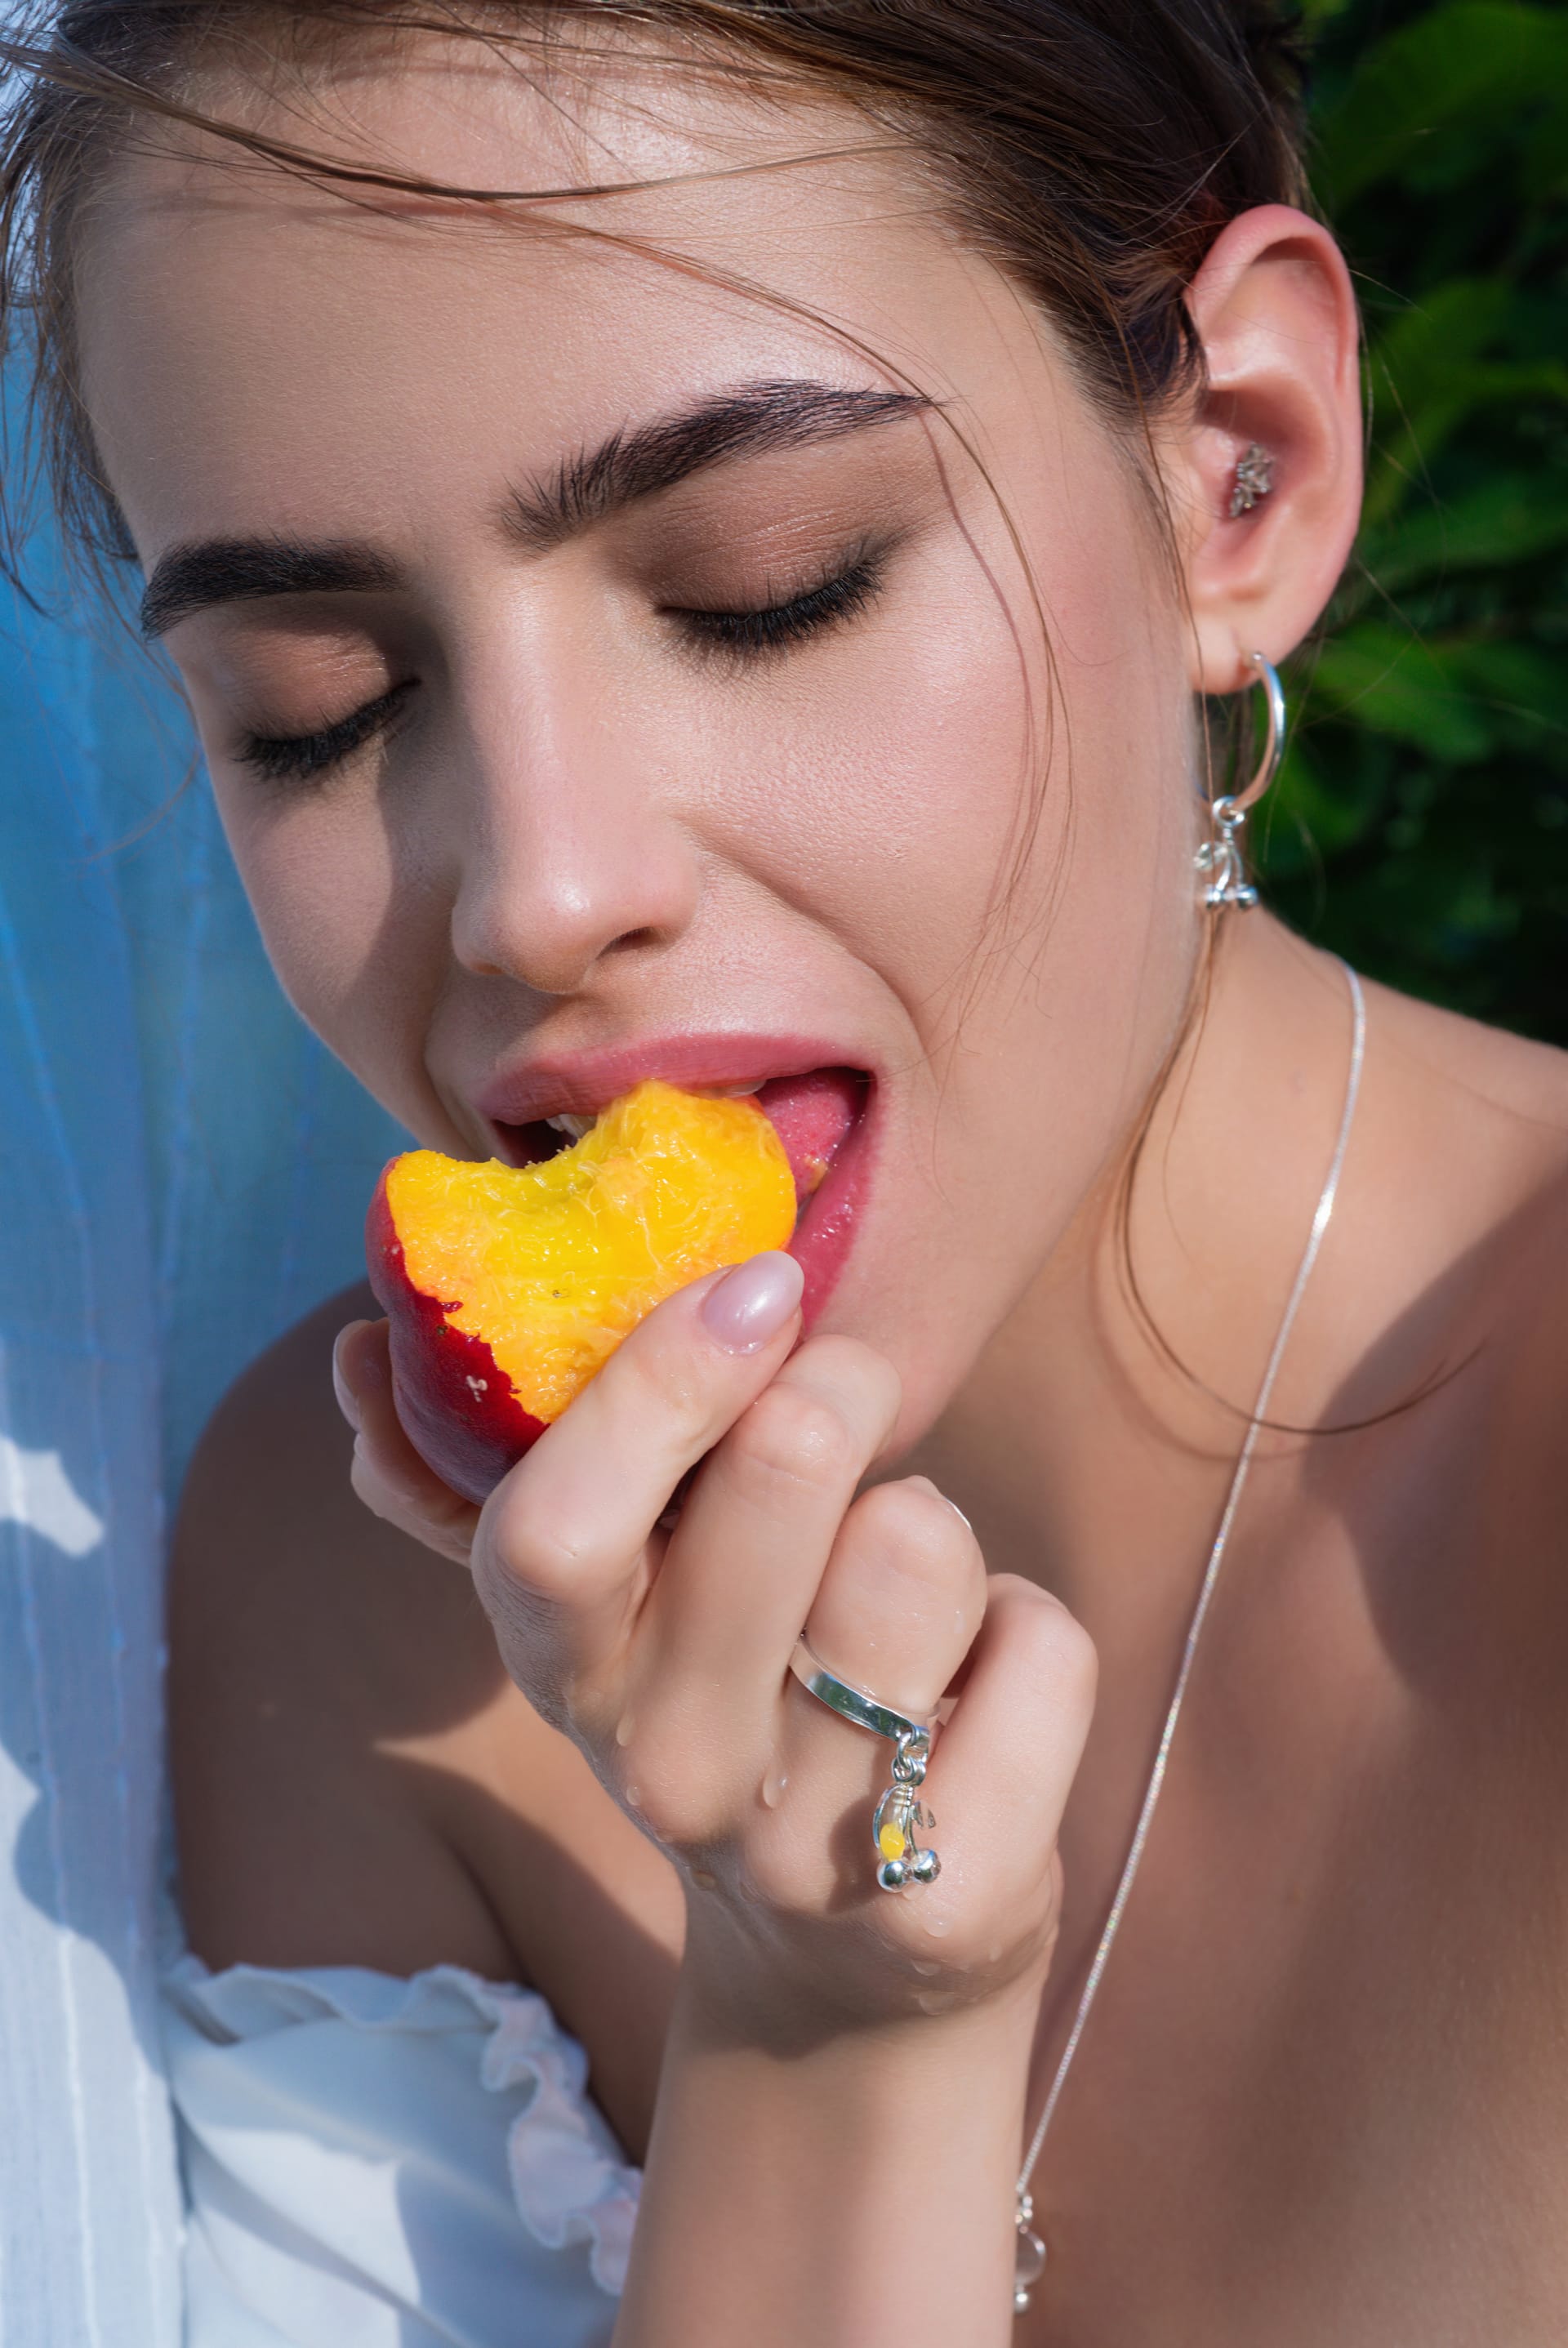 Stylish sensual woman posing summer greenery outdoor woman eat peach close up count